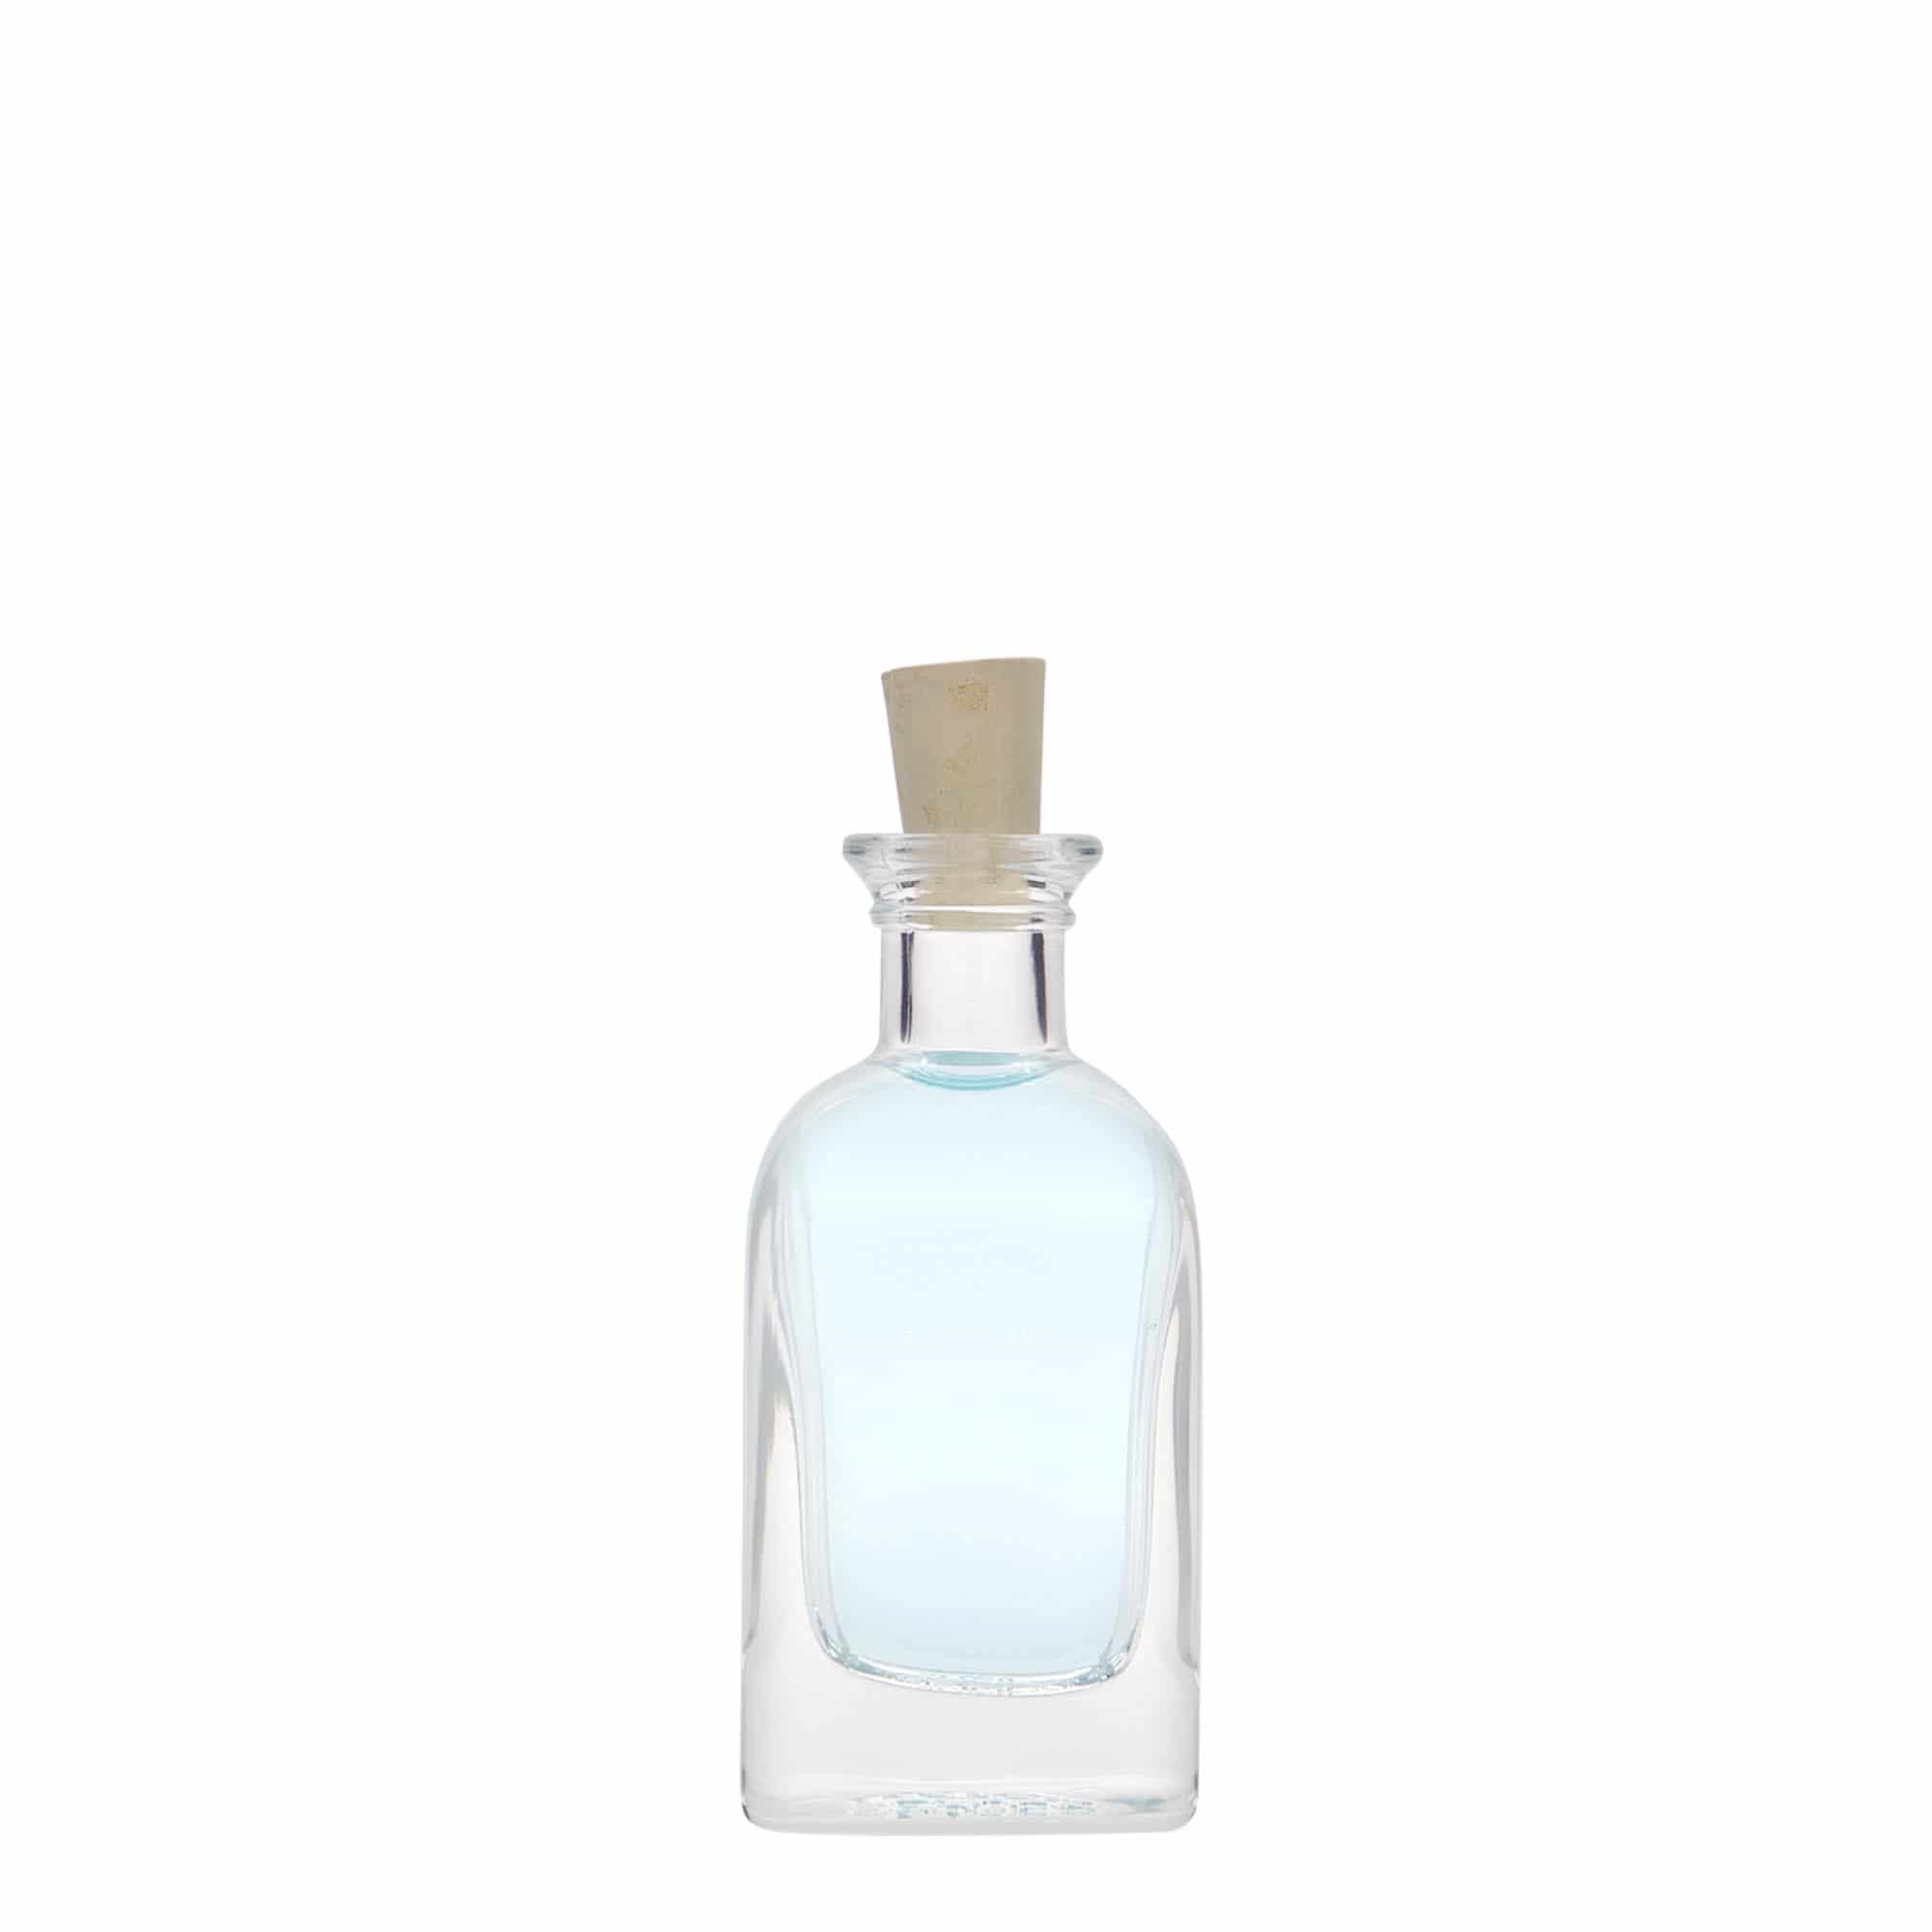 40 ml glass apothecary bottle Carré, square, closure: cork